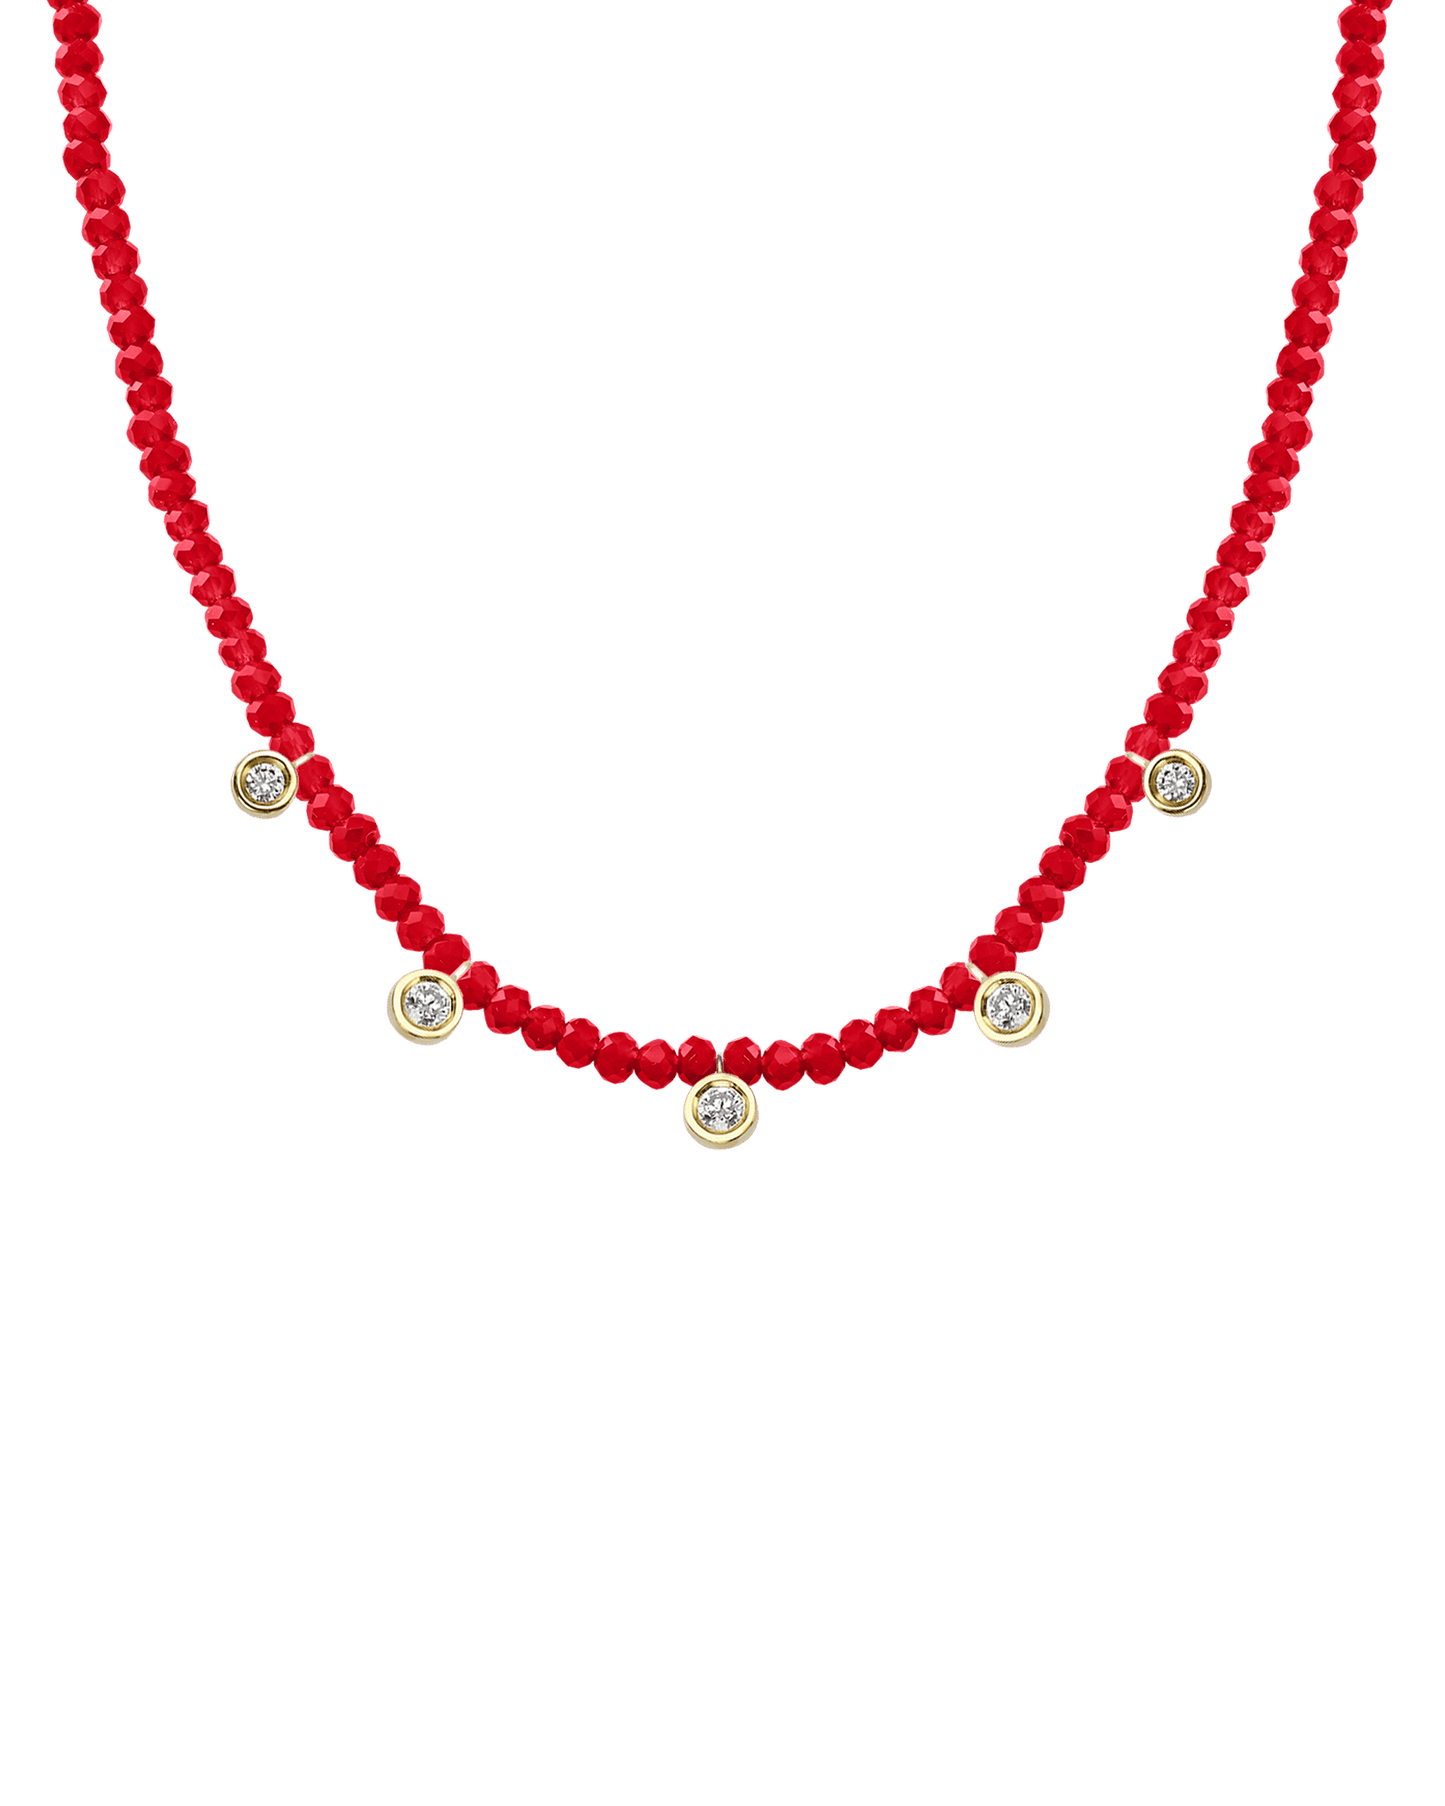 Blue Lapis Gemstone & Five diamonds Necklace - 14K White Gold